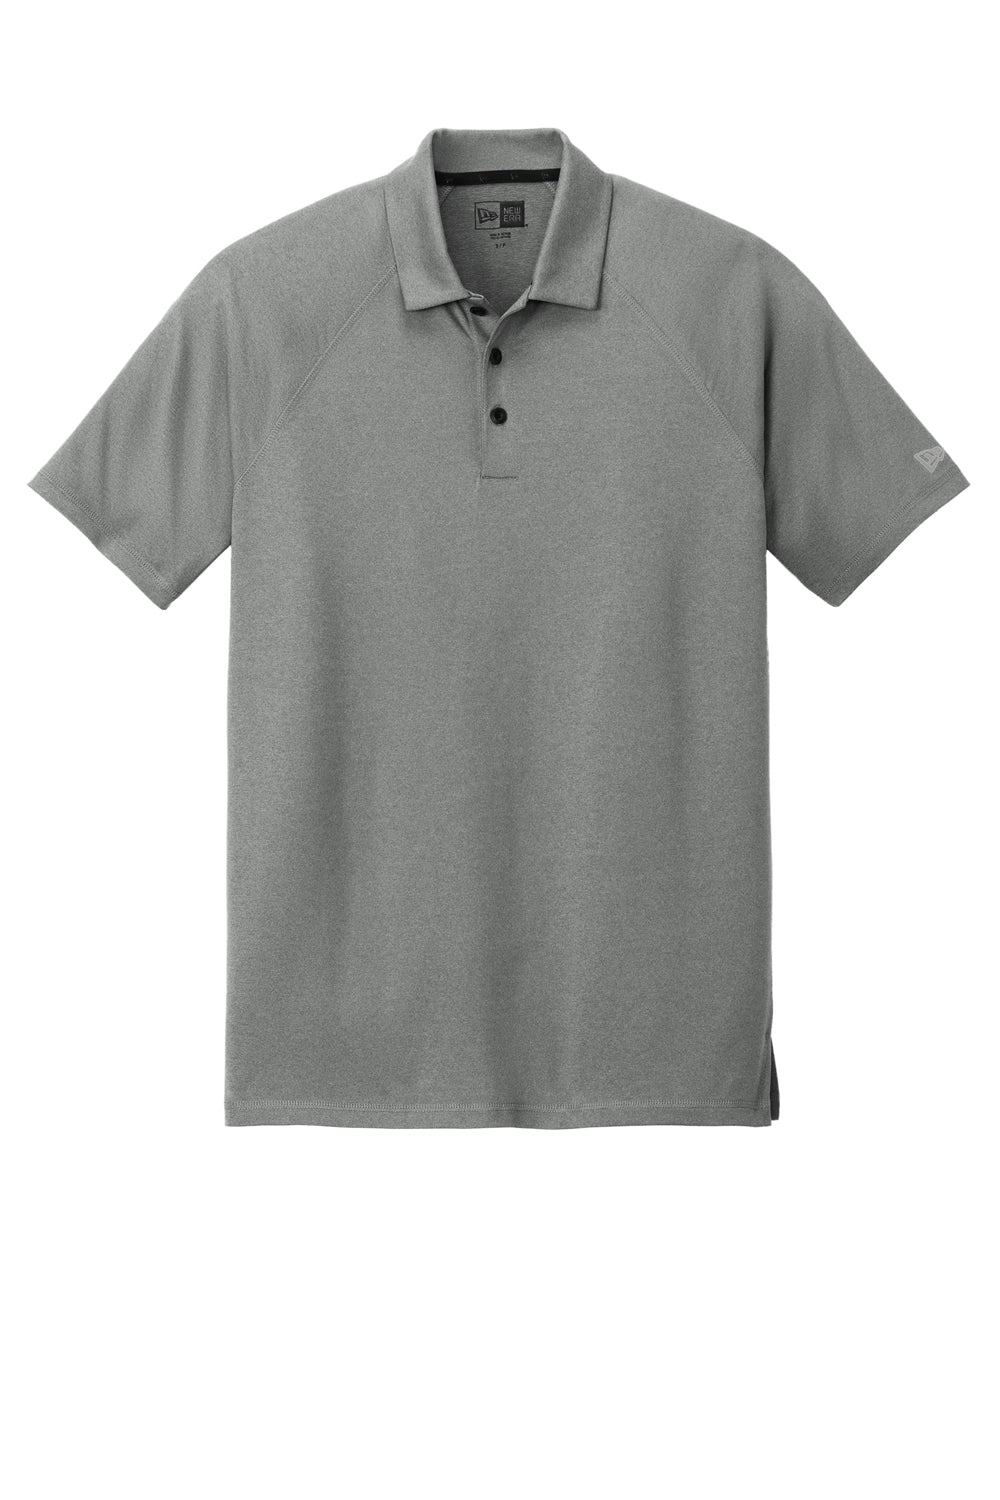 New Era Mens Power Short Sleeve Polo Shirt Heather Shadow Grey Flat Front